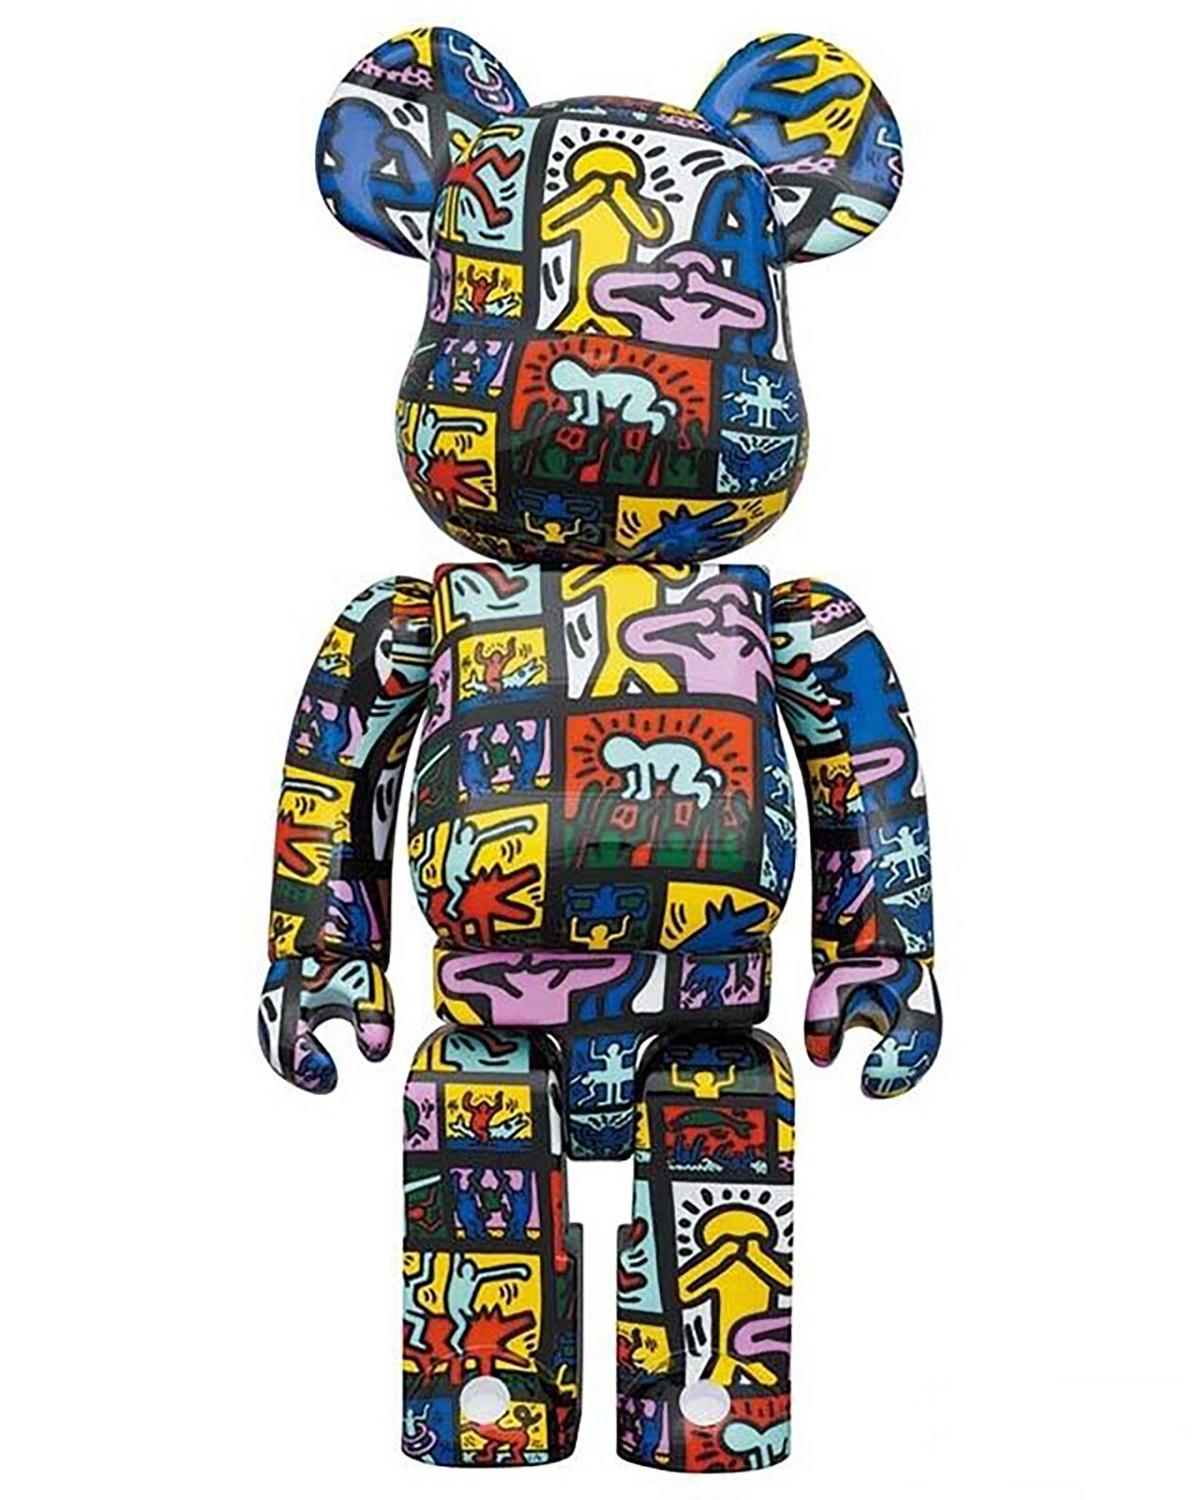 Keith Haring Bearbrick 400 %  Keith Haring BE@RBRICK  - Art urbain Sculpture par (after) Keith Haring